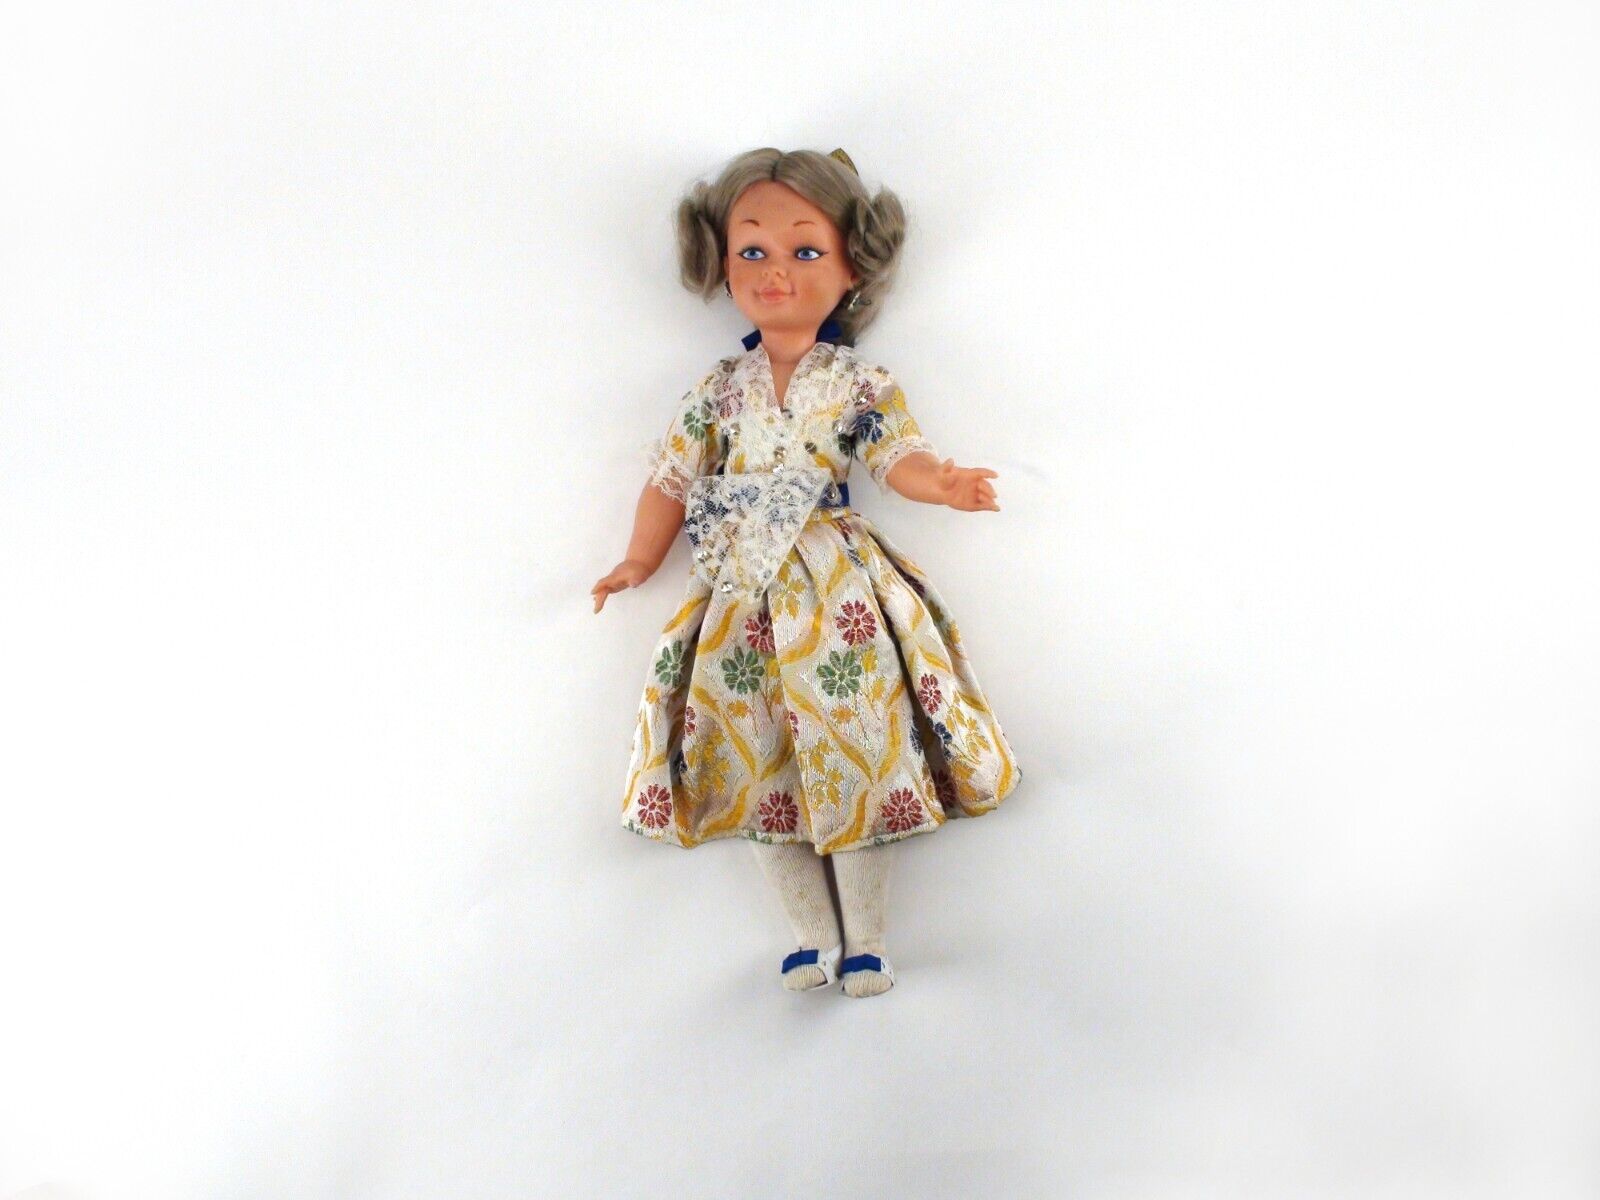 Vintage 1964 Walt Disney Productions Vinyl Doll - Mary Poppins, Please See Photo